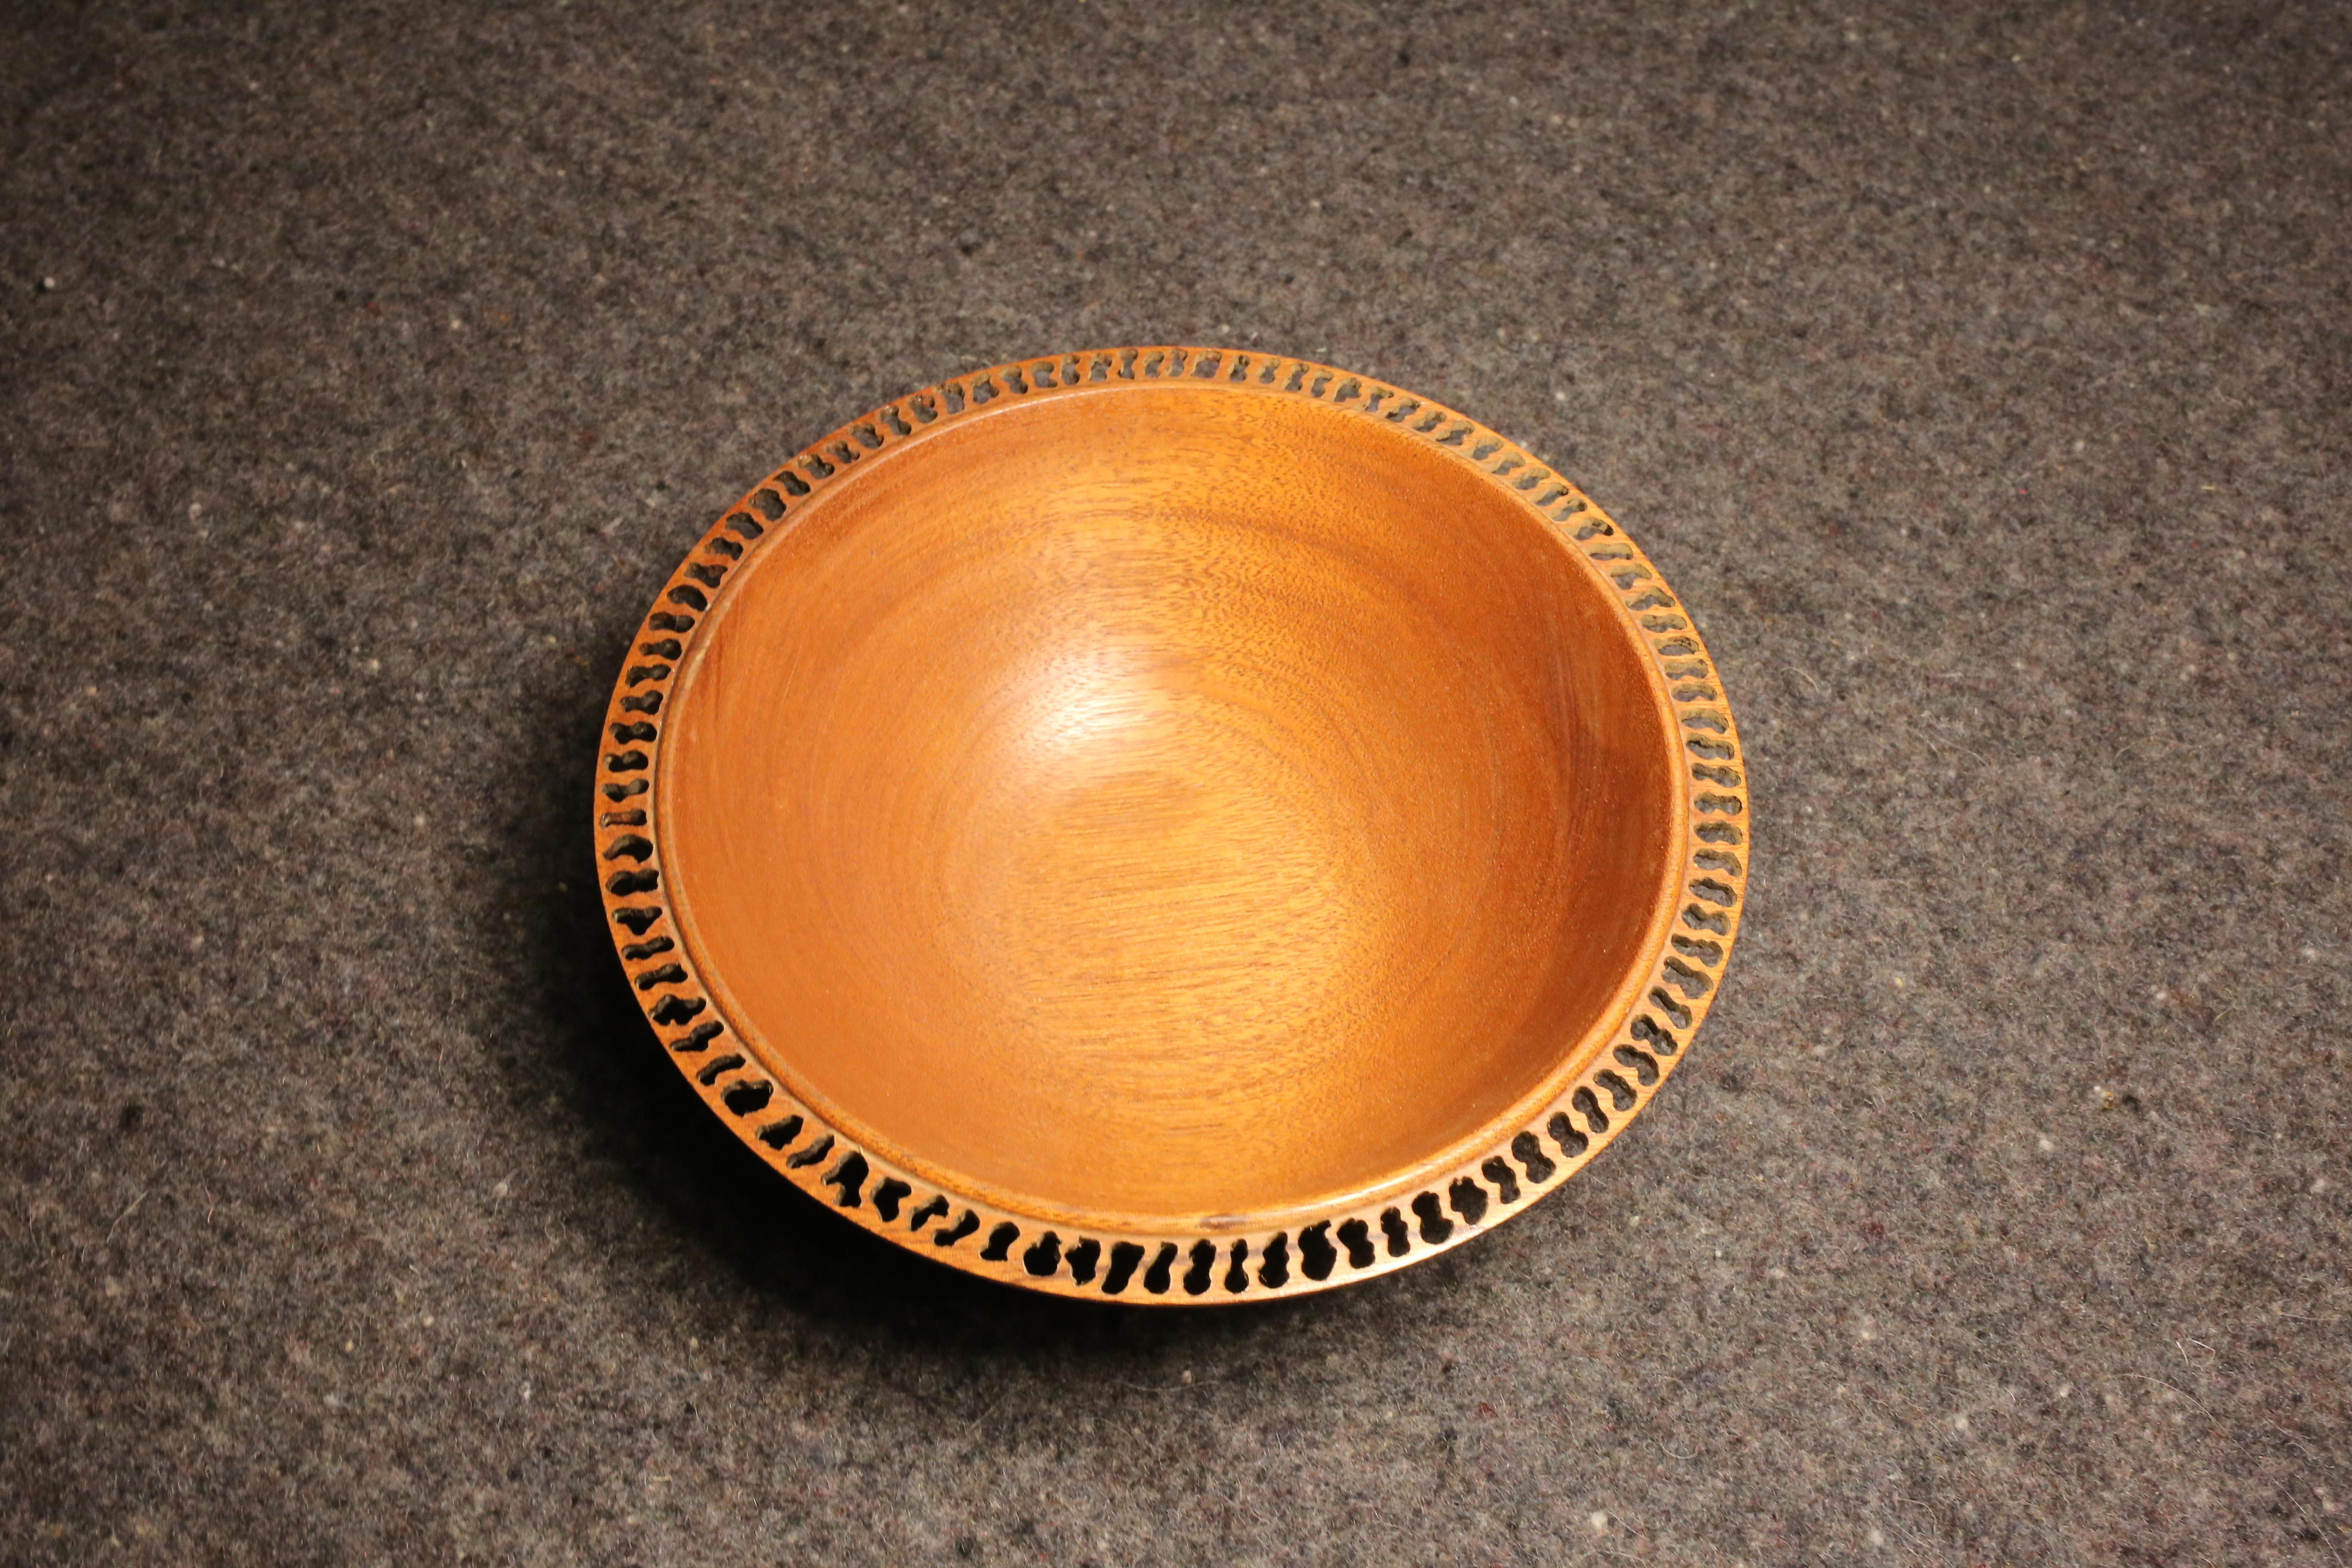 a wooden bowl